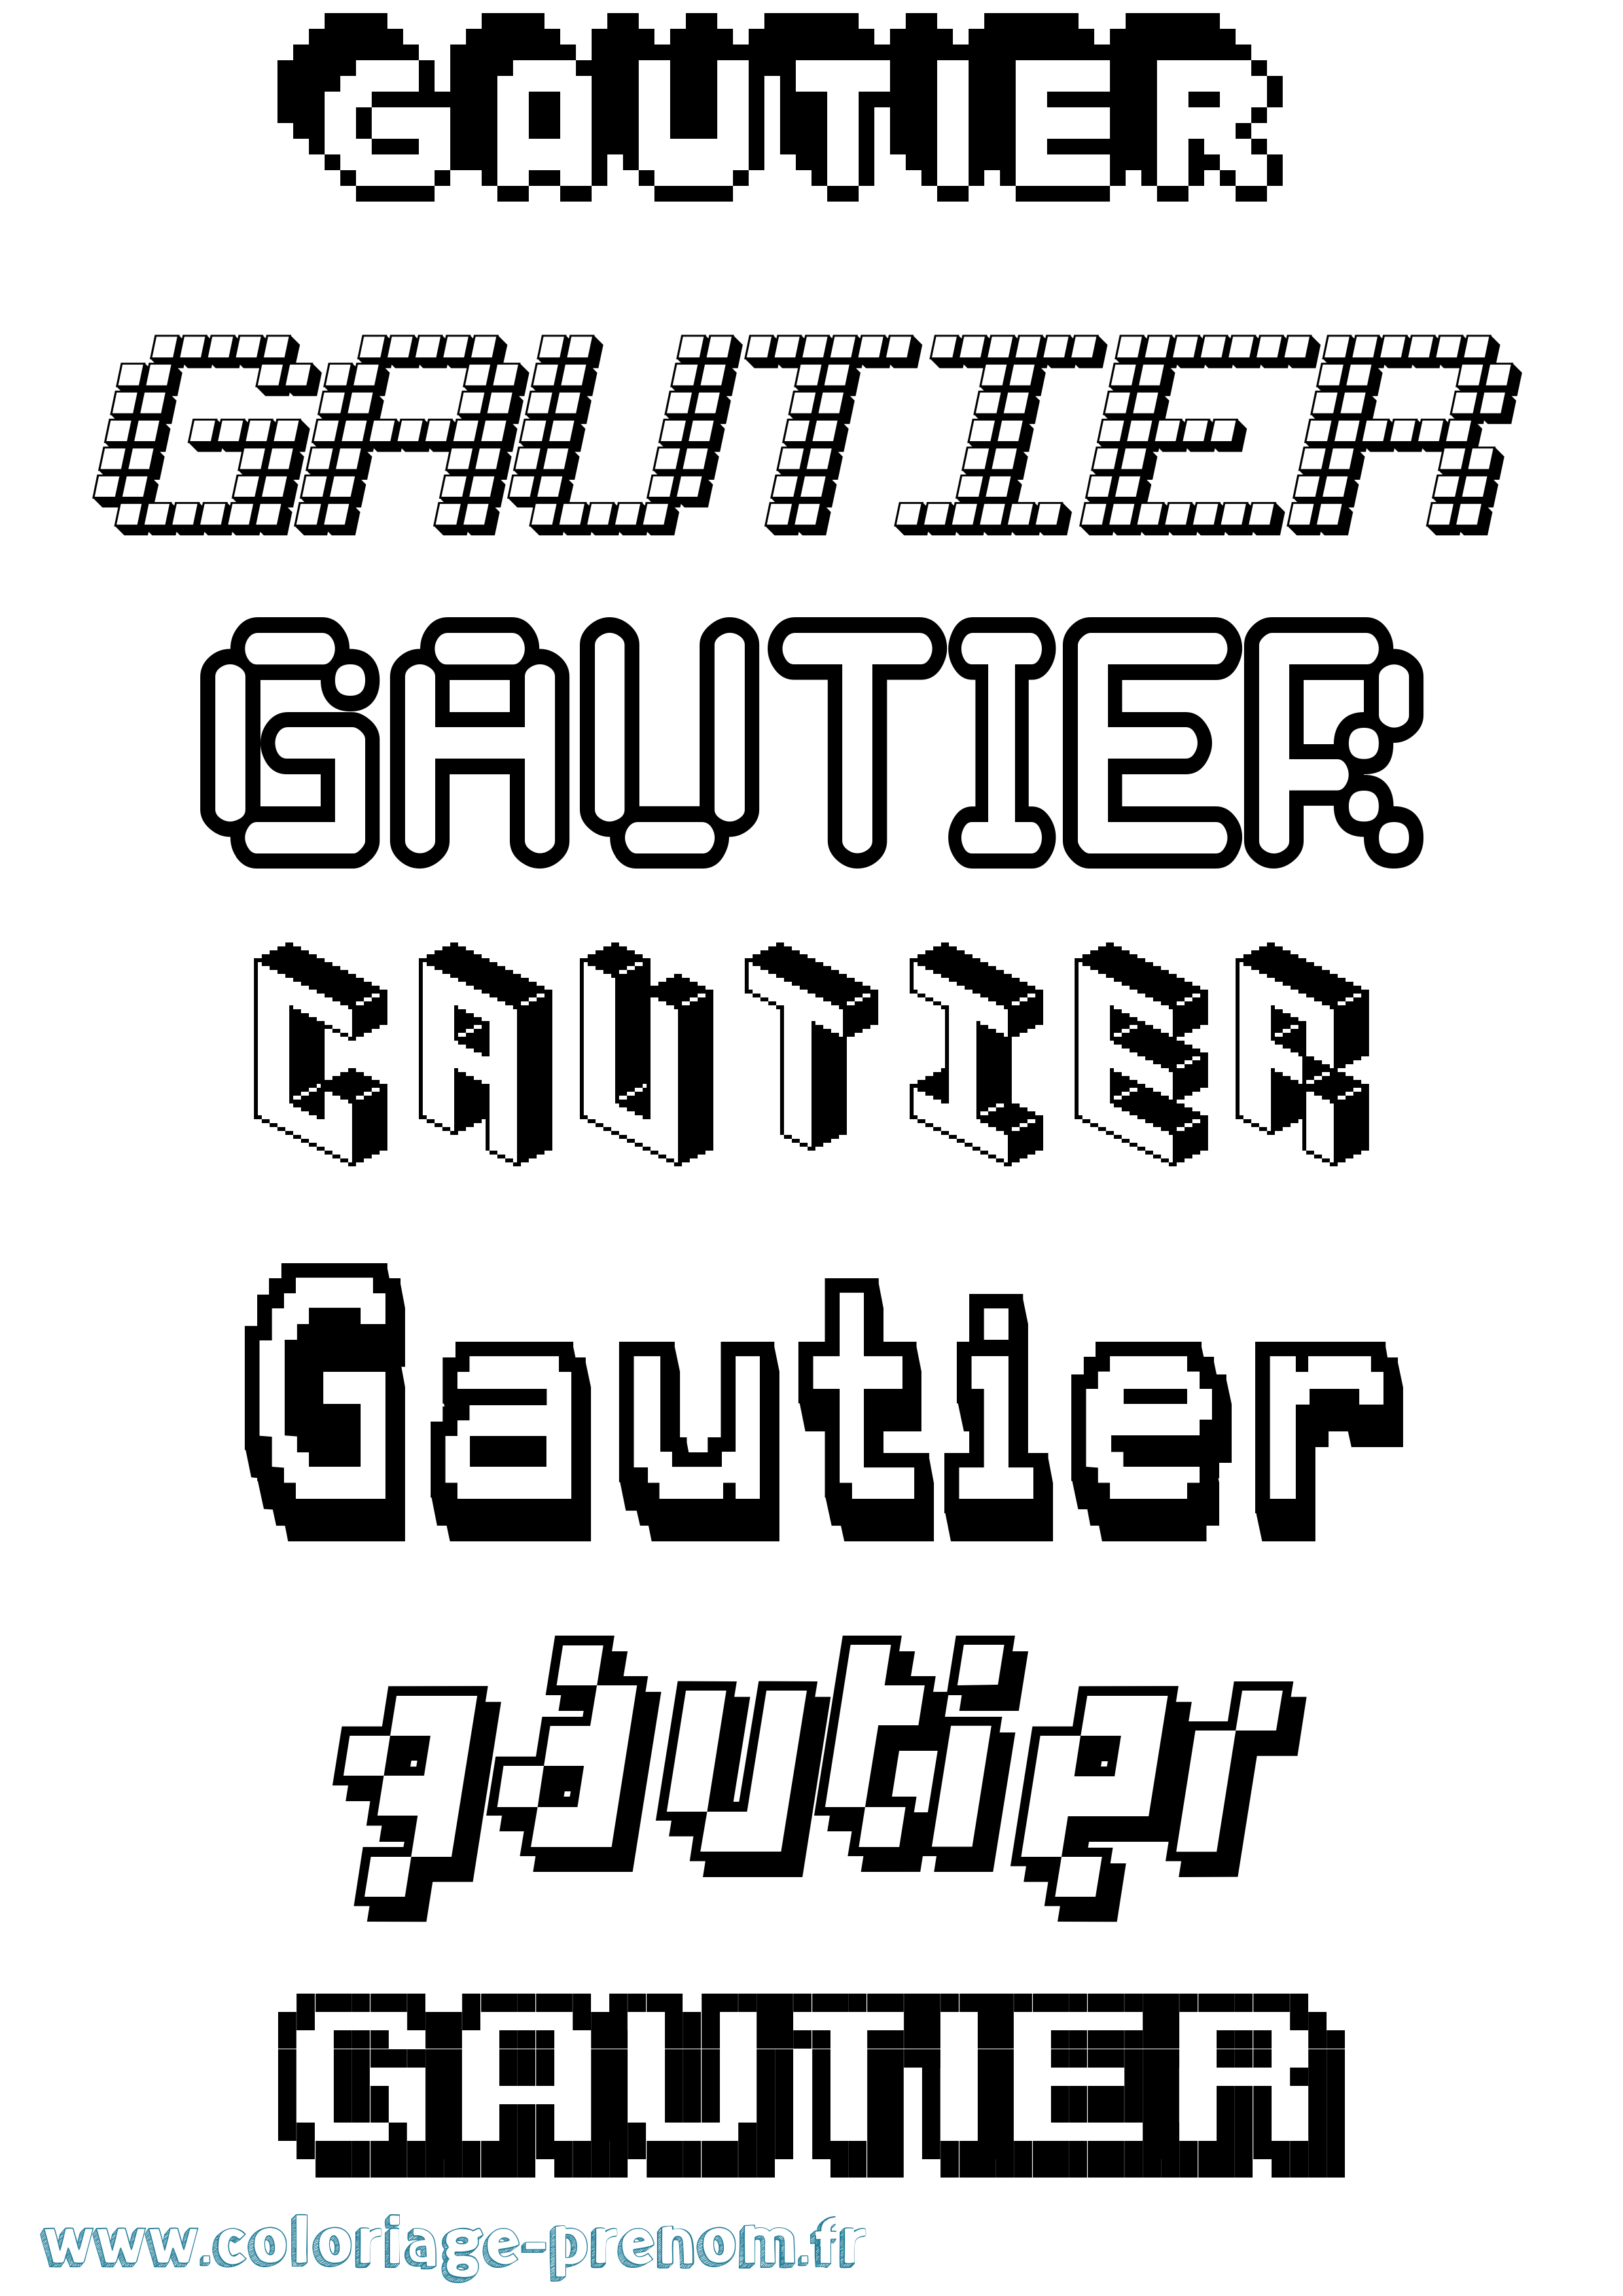 Coloriage prénom Gautier Pixel